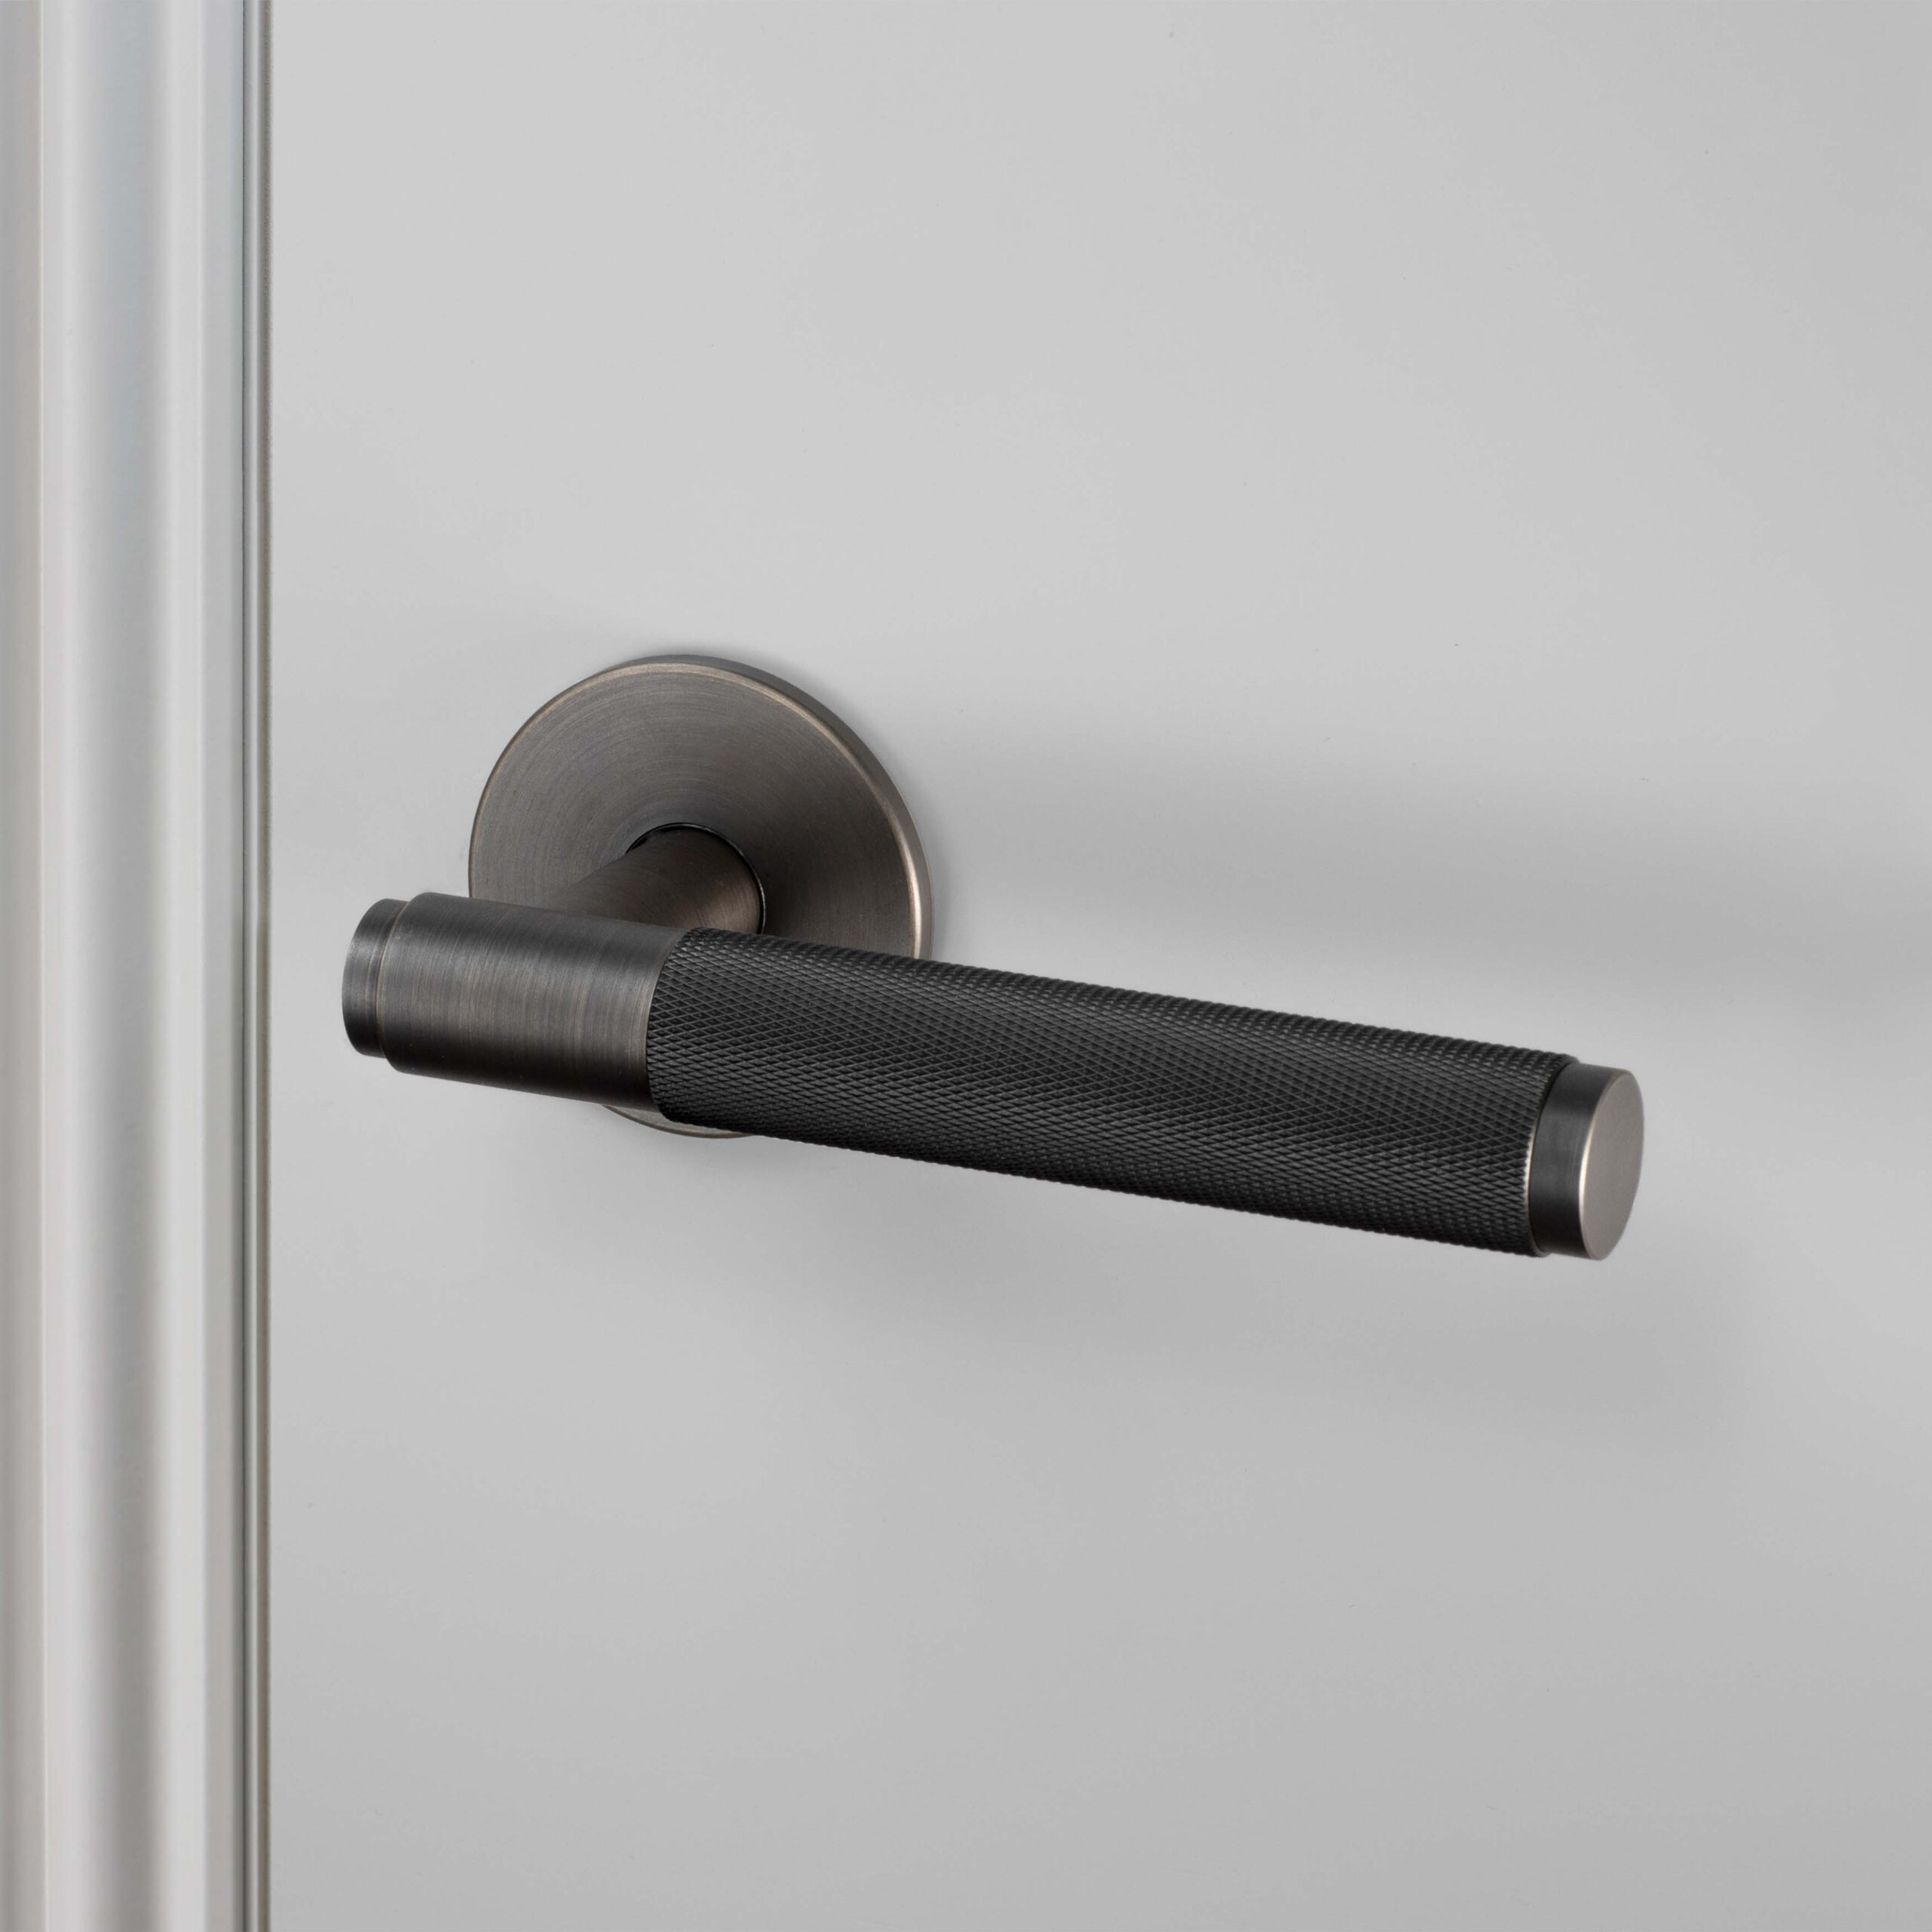 https://www.busterandpunch.com/us/wp-content/uploads/sites/2/2020/03/1.-BusterPunch_Door_Handle_Right_Fixed_Smoked_Bronze-1-scaled.jpg